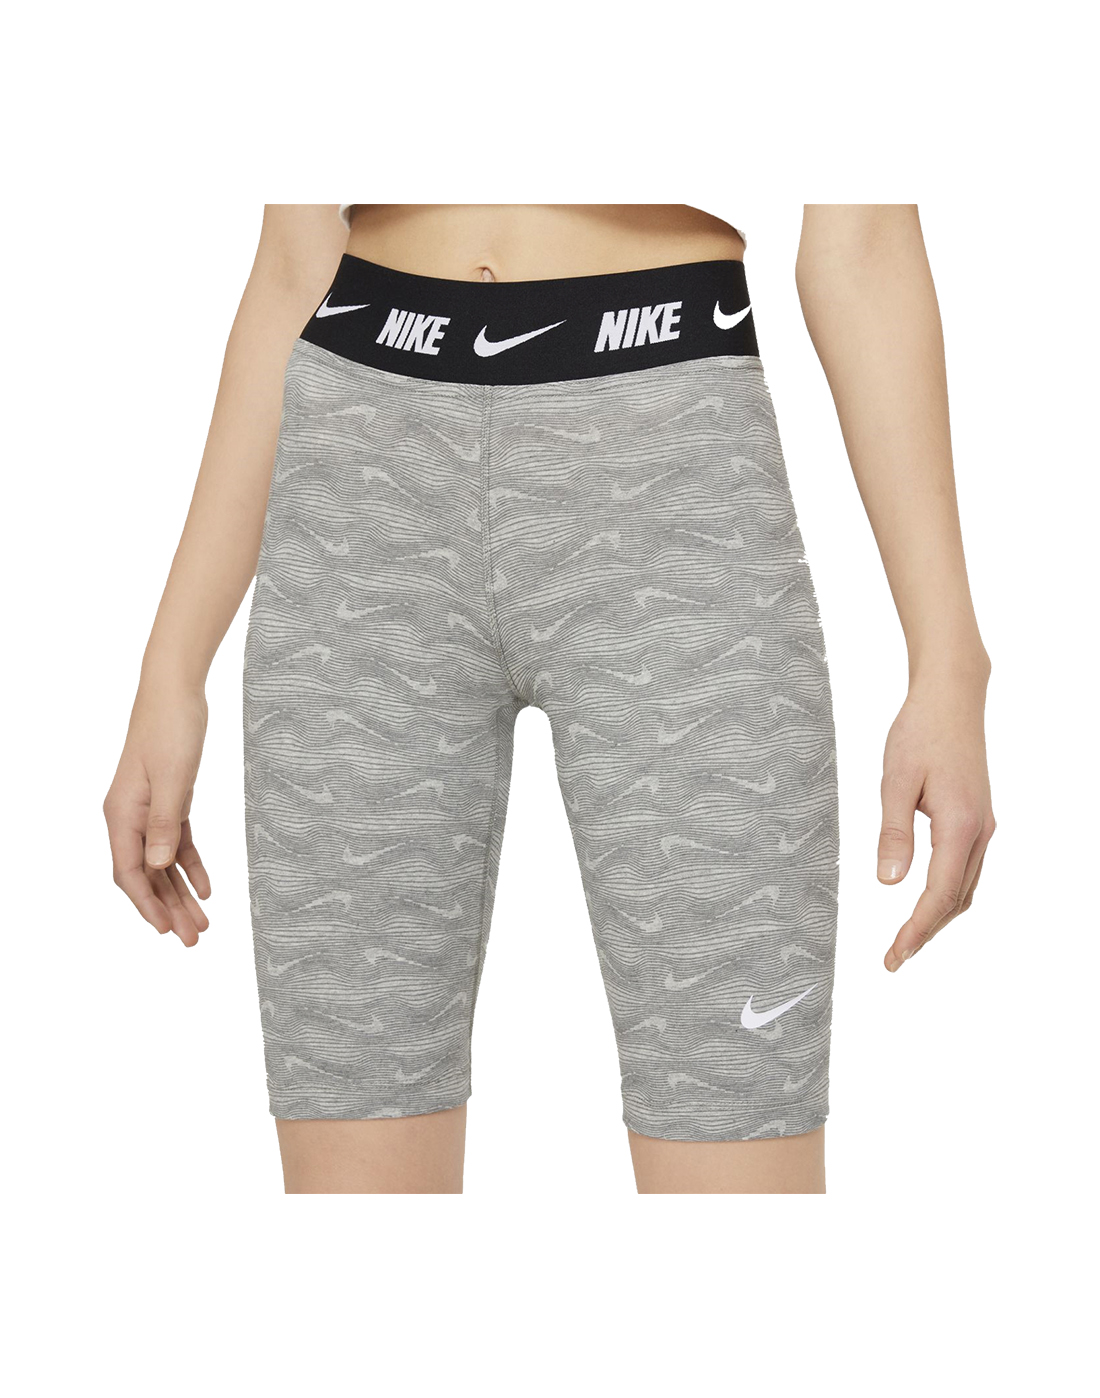 Nike Womens Short Printed Leggings - Grey | Life Style Sports IE